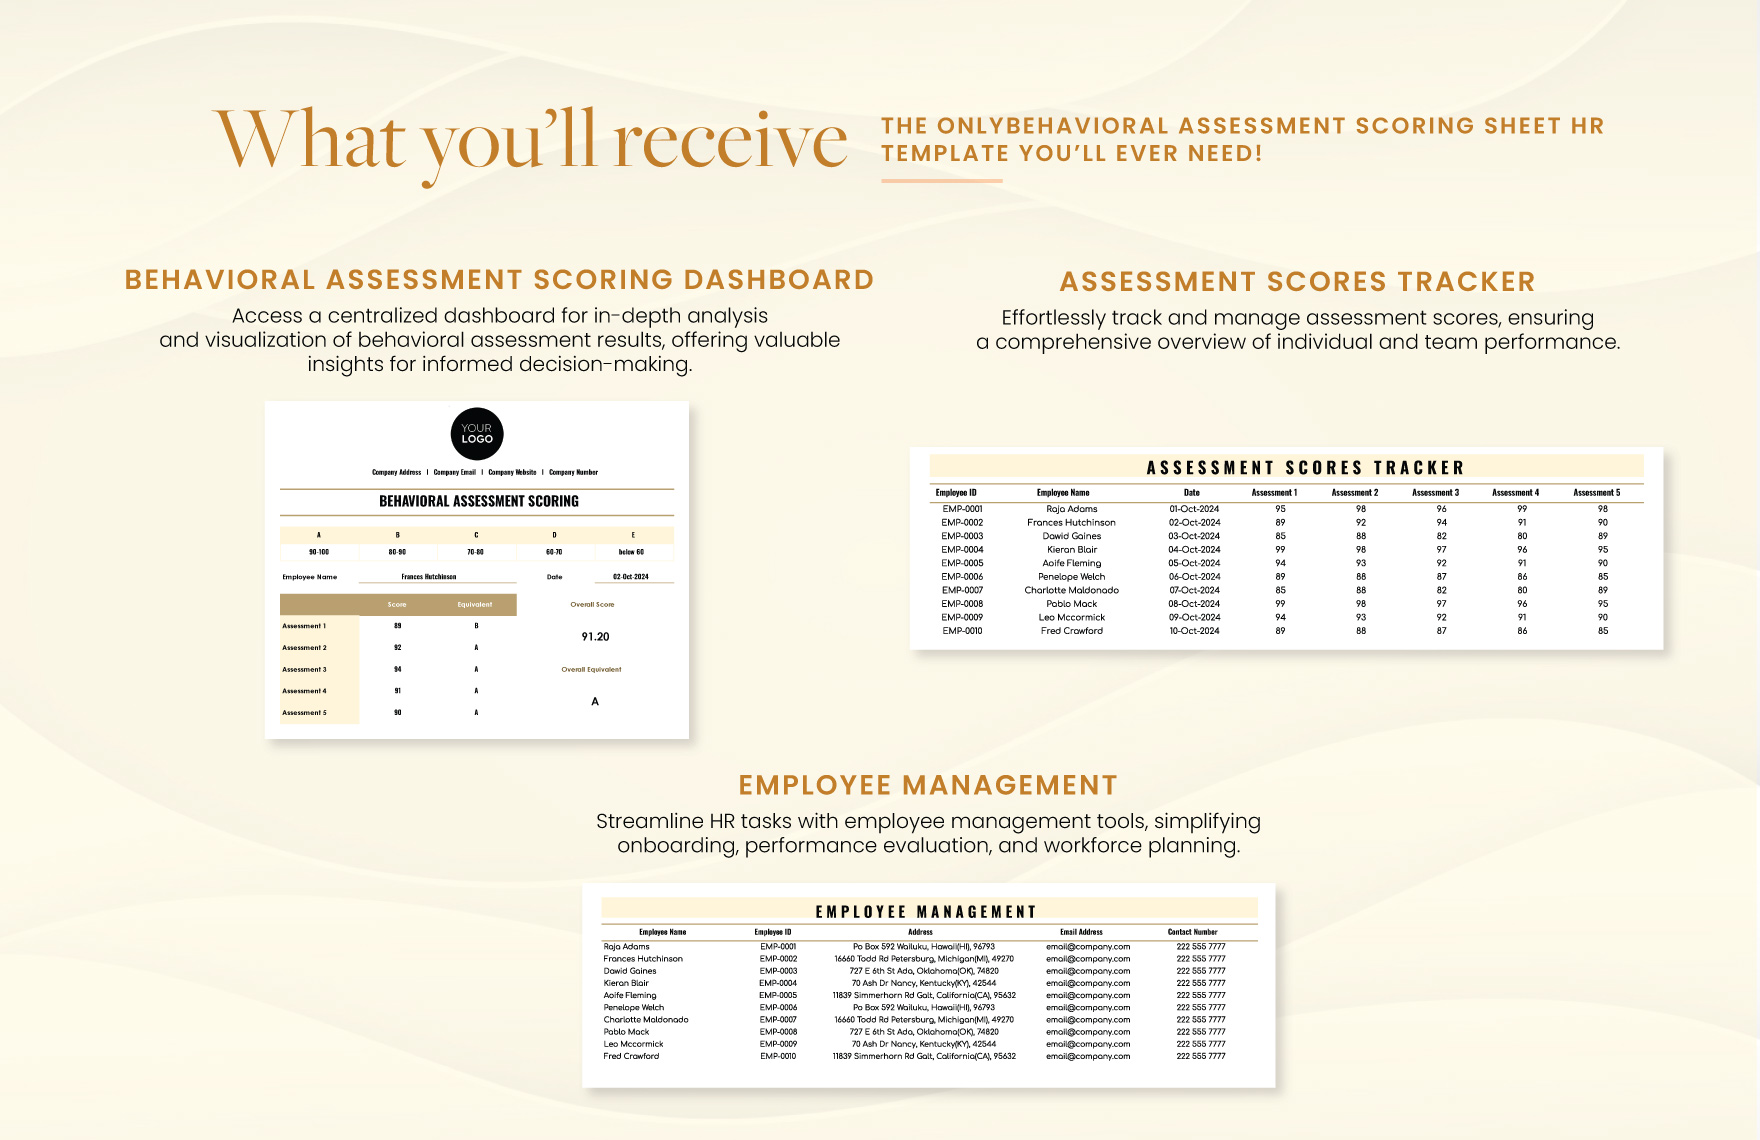 Behavioral Assessment Scoring Sheet HR Template